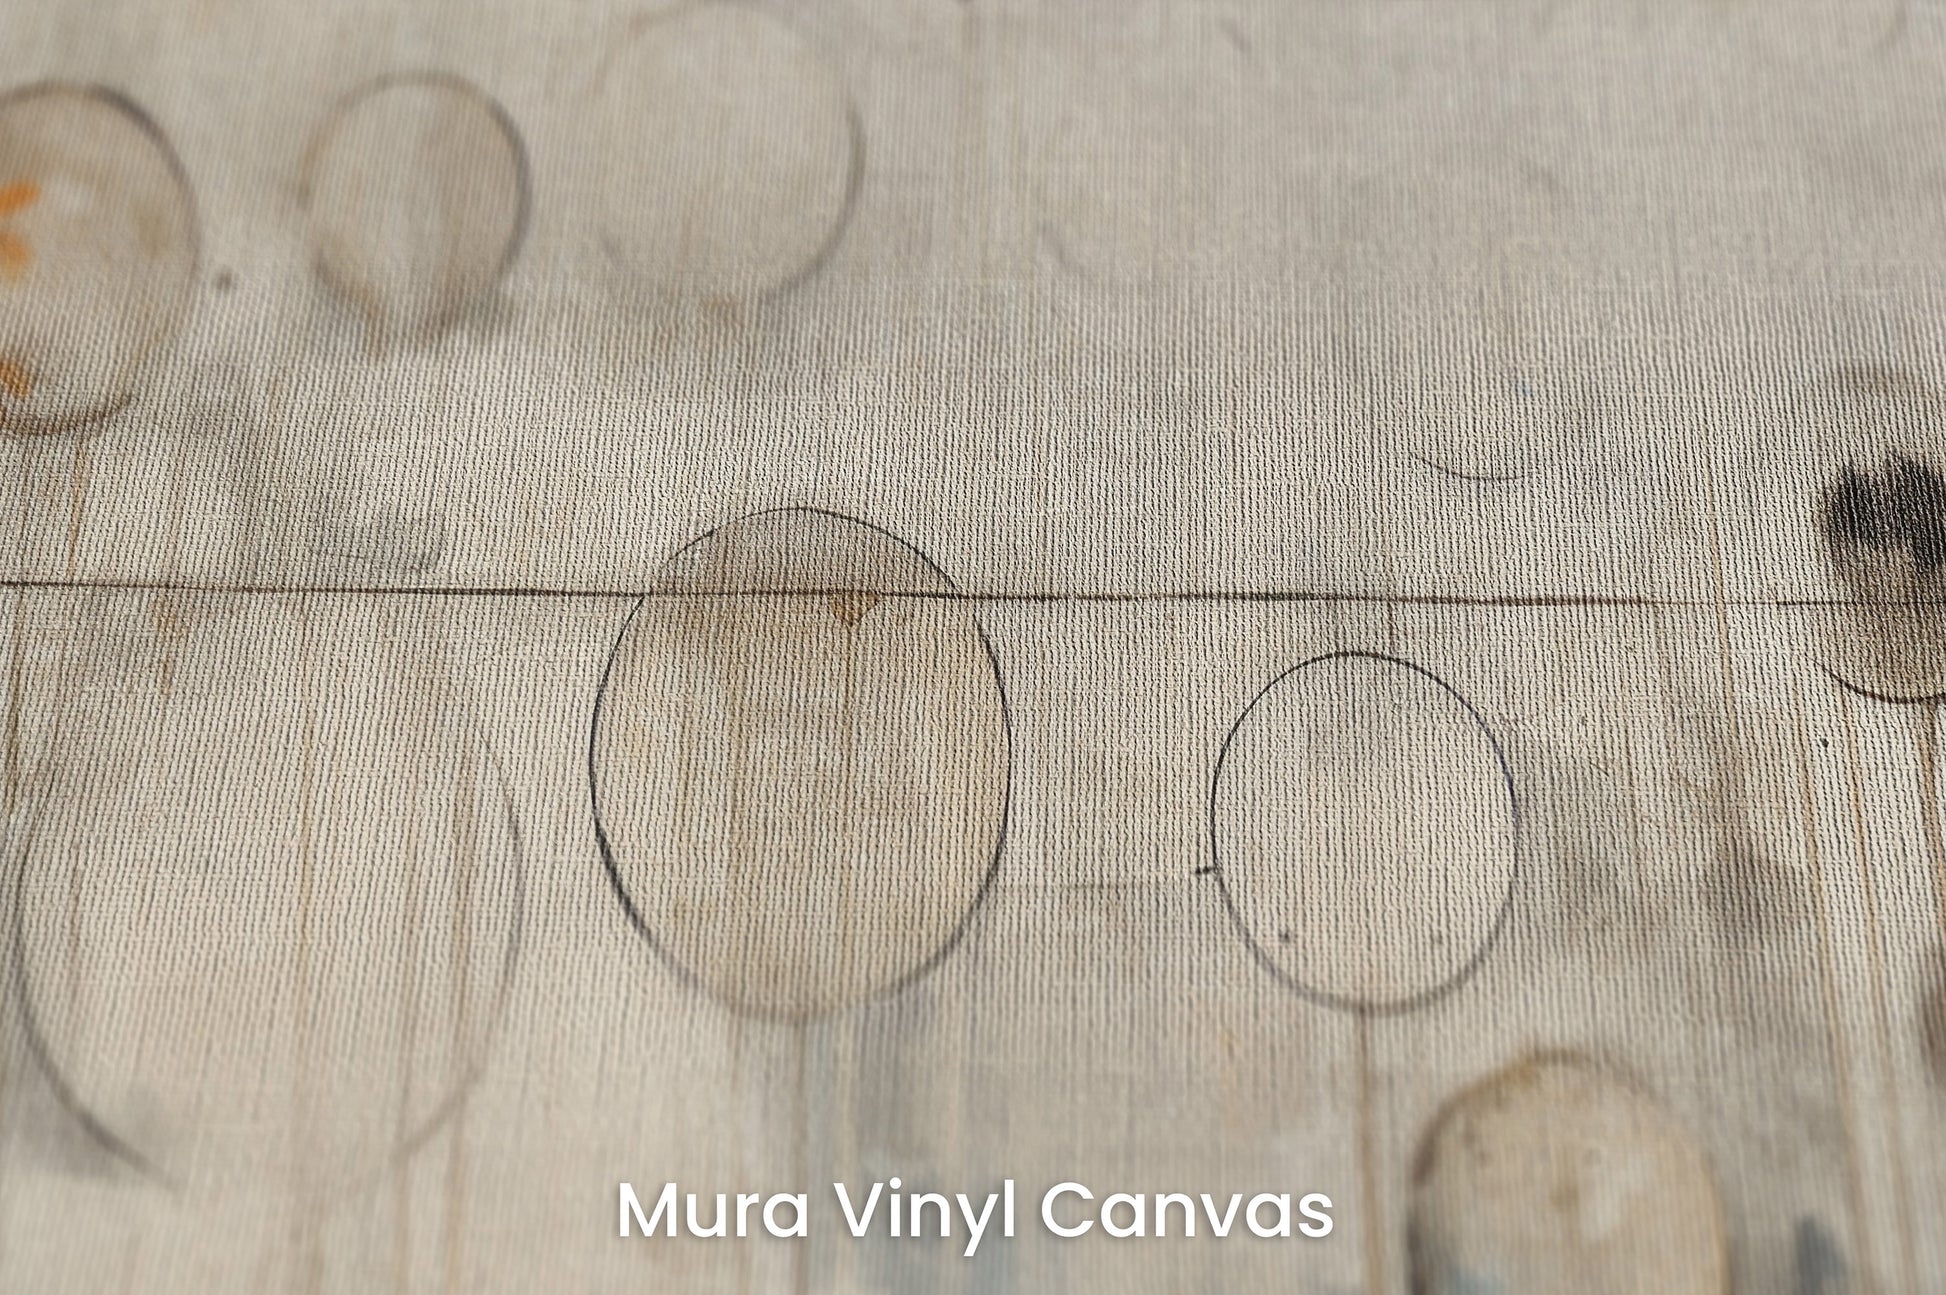 Zbliżenie na artystyczną fototapetę o nazwie CELESTIAL SPHERES ABSTRACTION na podłożu Mura Vinyl Canvas - faktura naturalnego płótna.